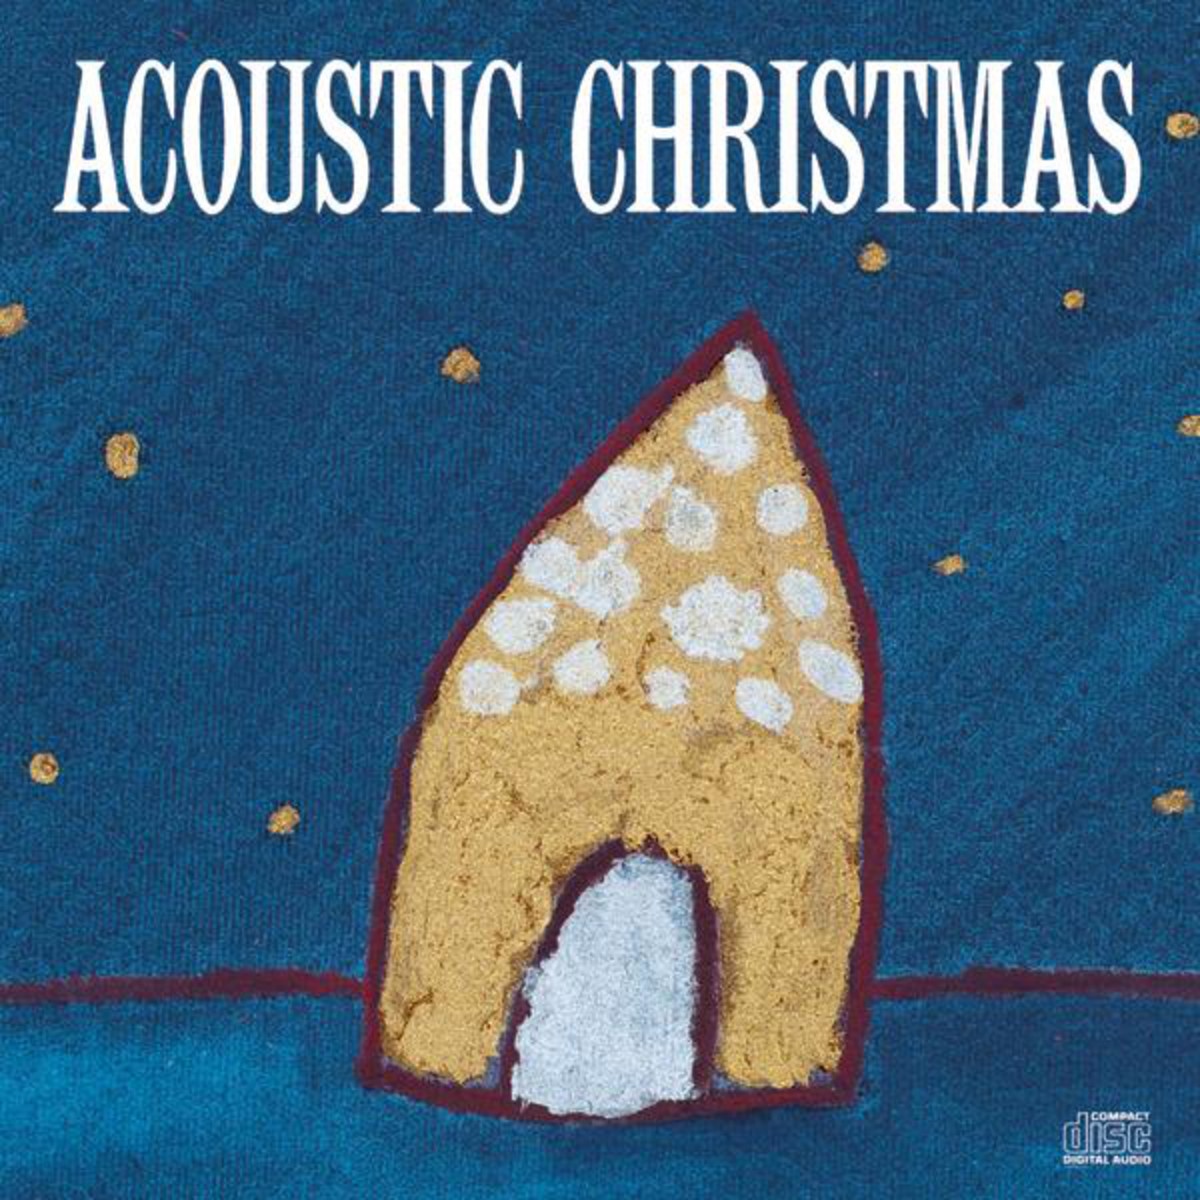 What Child Is This? (Acoustic Christmas Album Version) - unplug